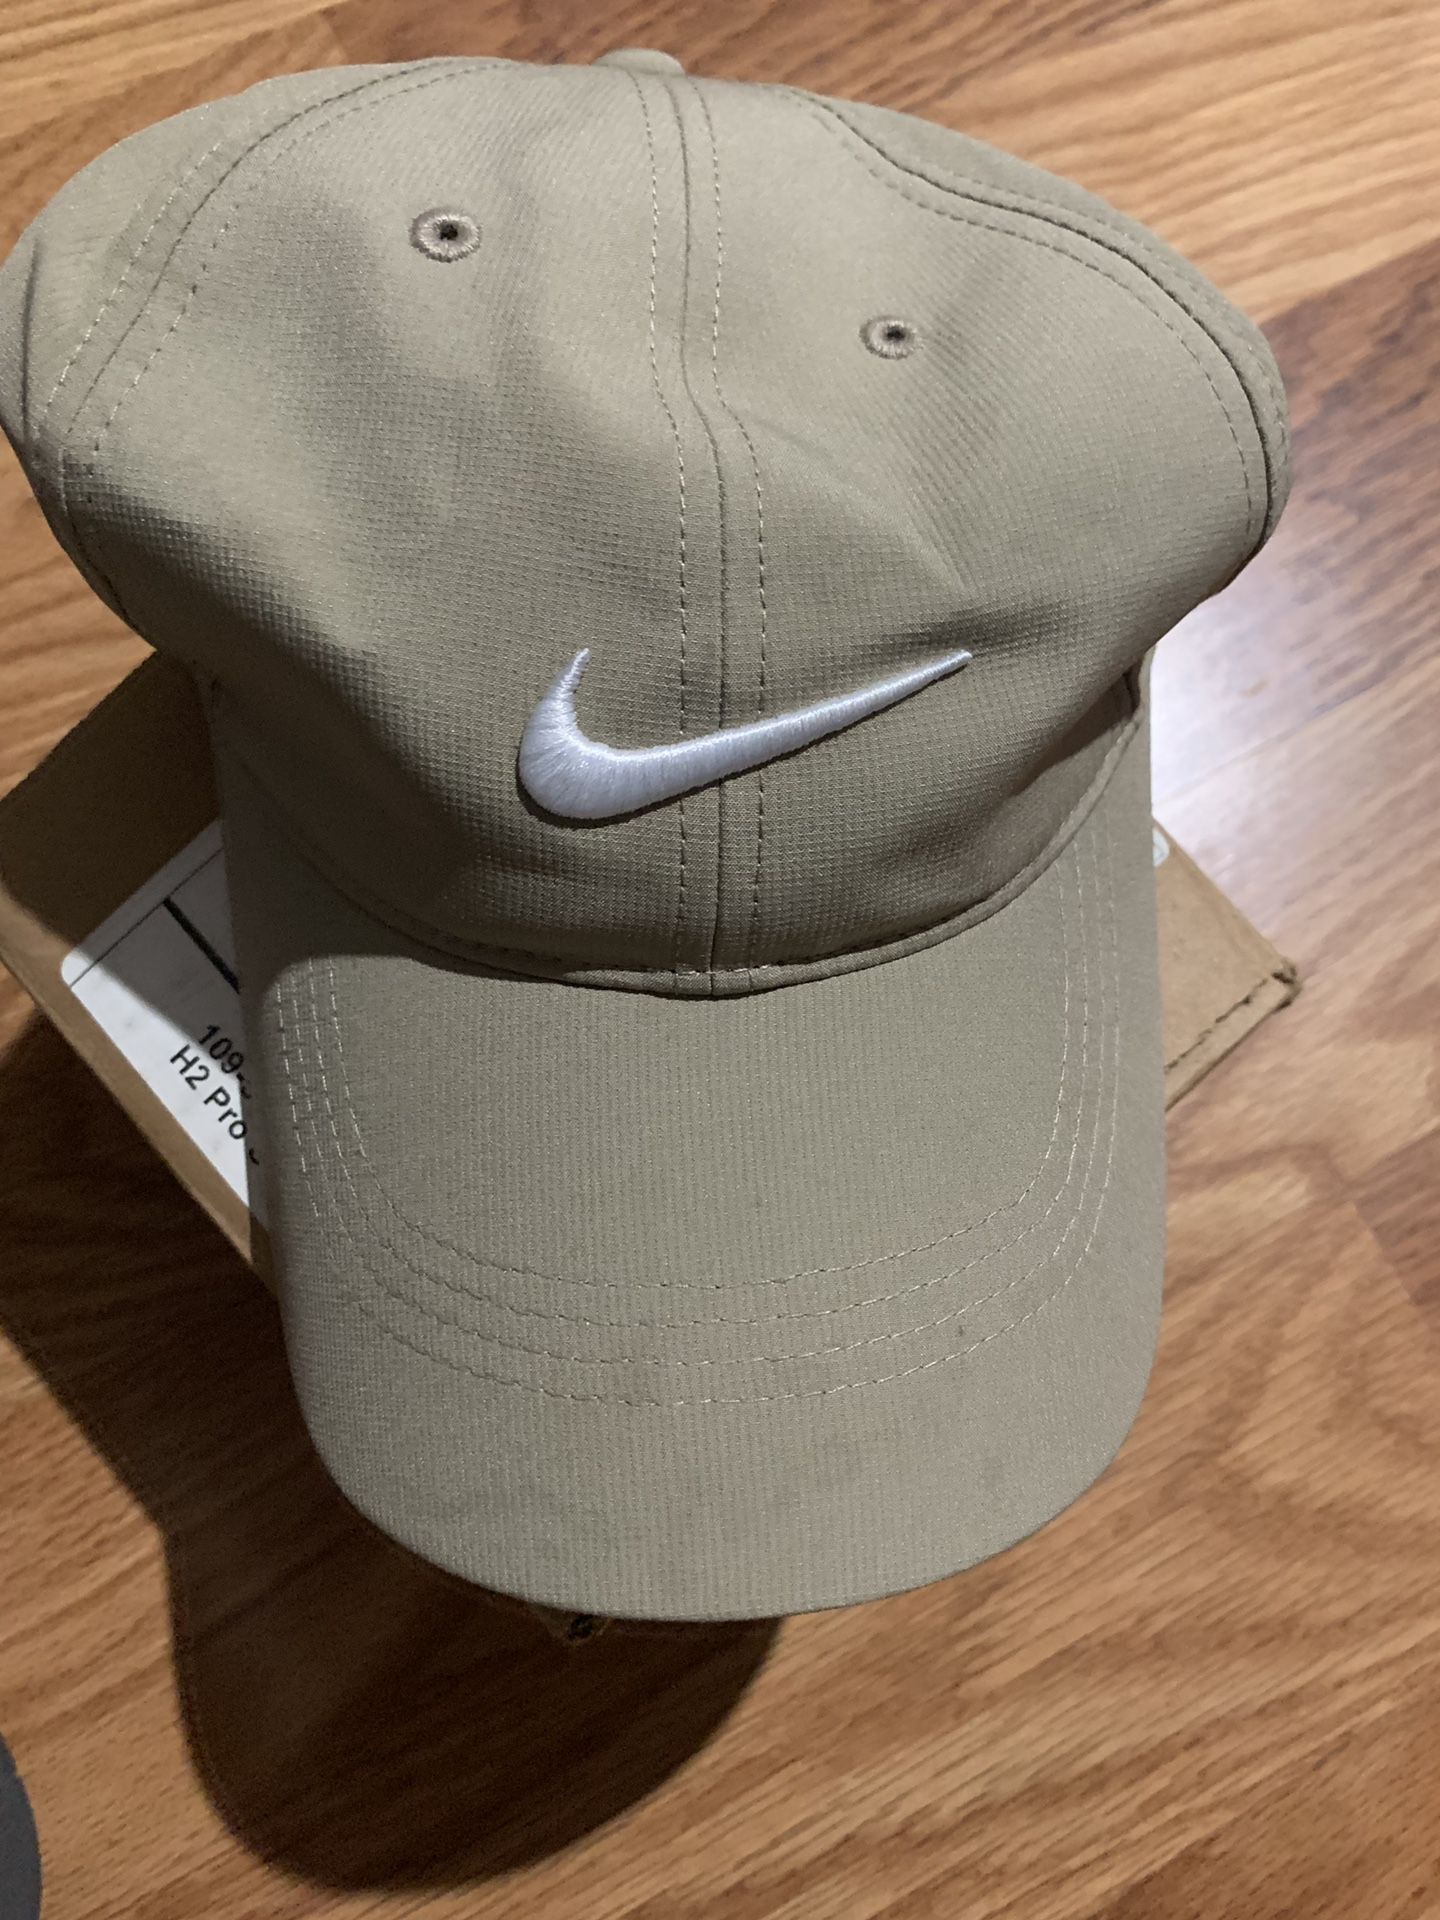 Tan Nike hat